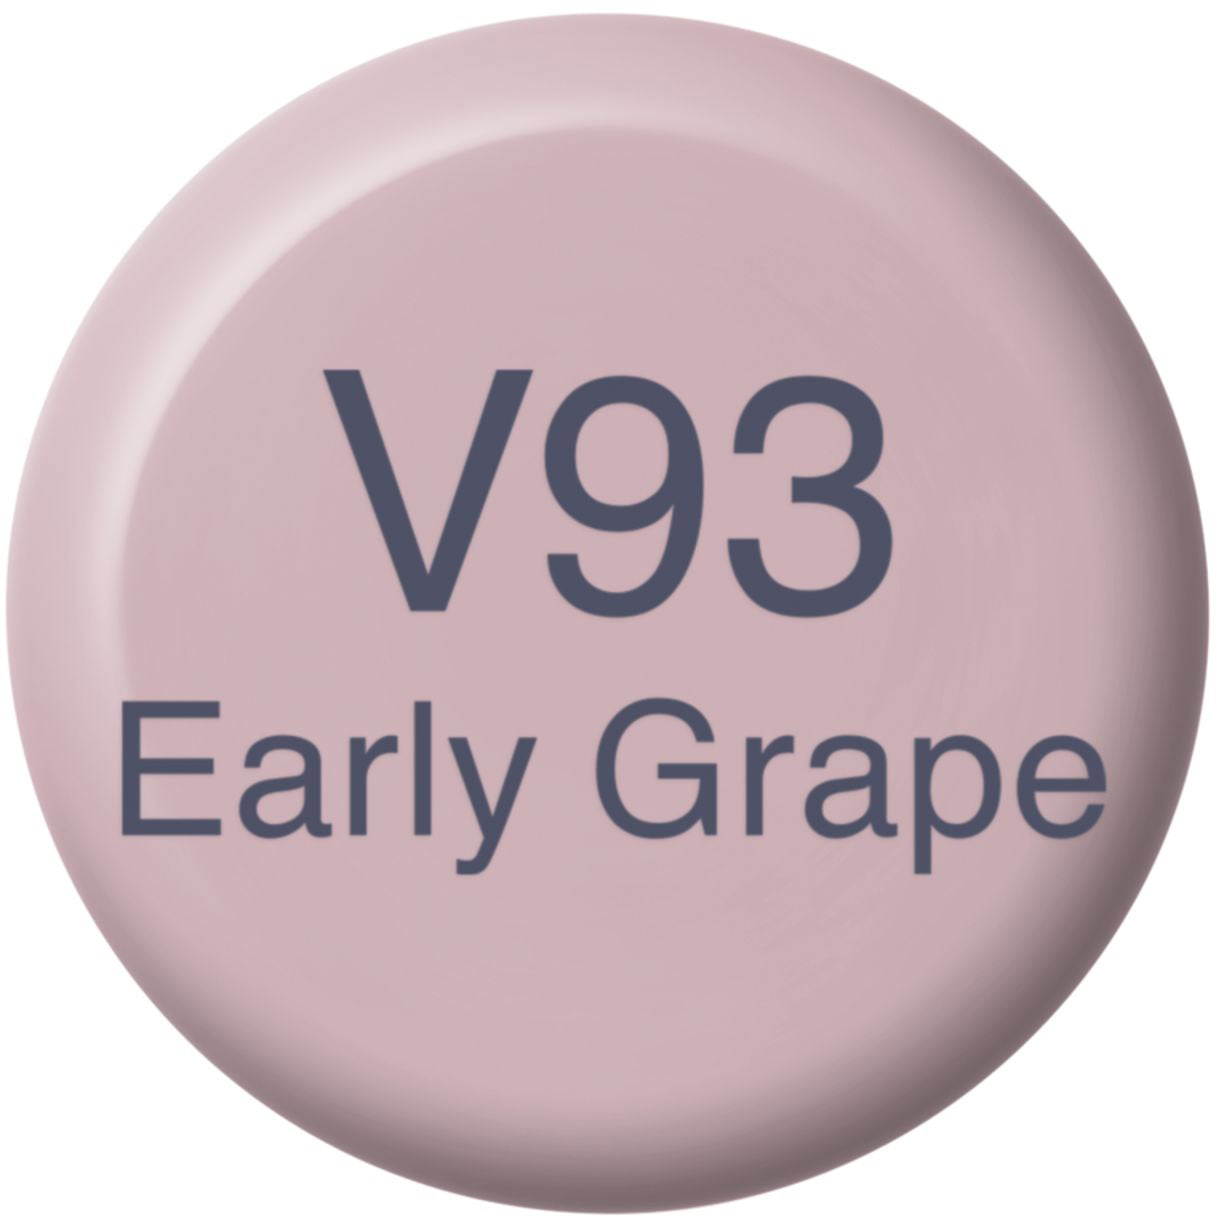 COPIC Ink Refill 21076297 V93 - Early Grape V93 - Early Grape